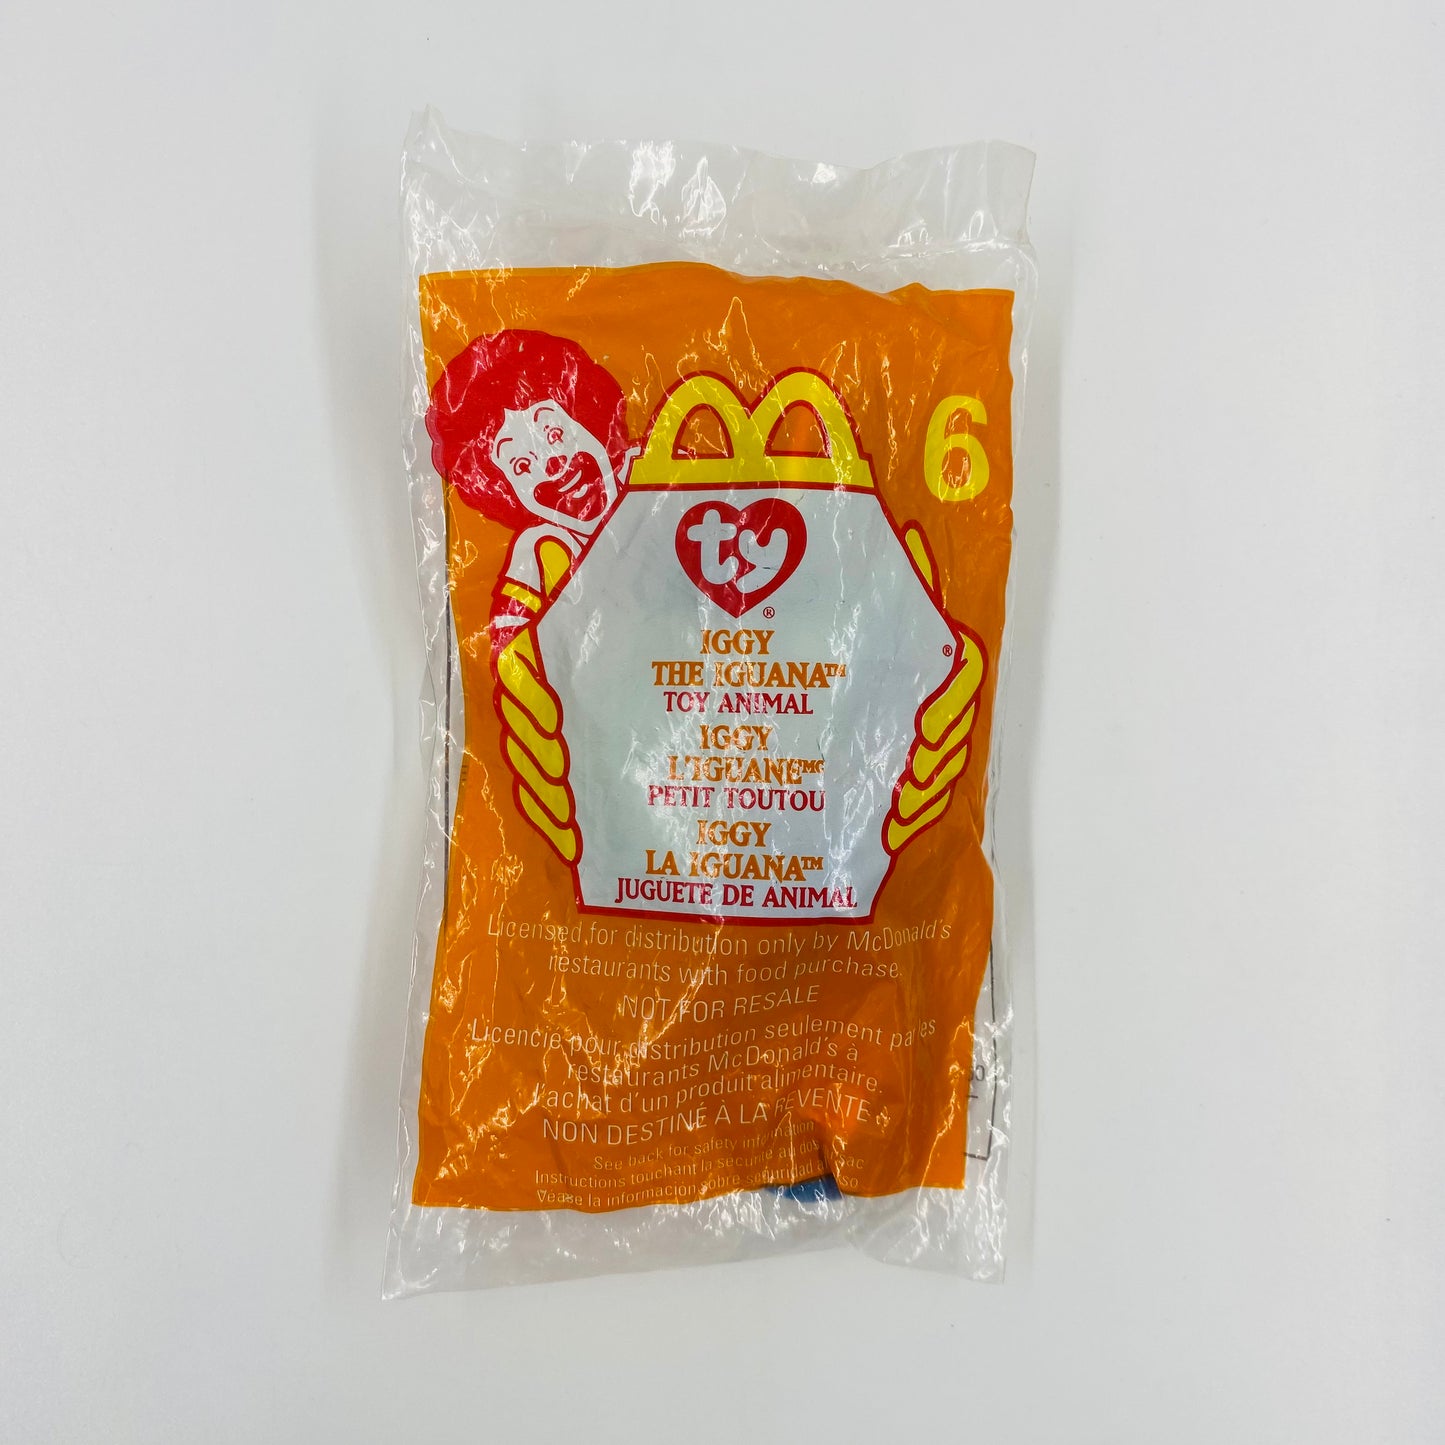 Teenie Beanie Babies Iggy the Iguana McDonald's Happy Meal bean bag plush toy animal (1999) bagged